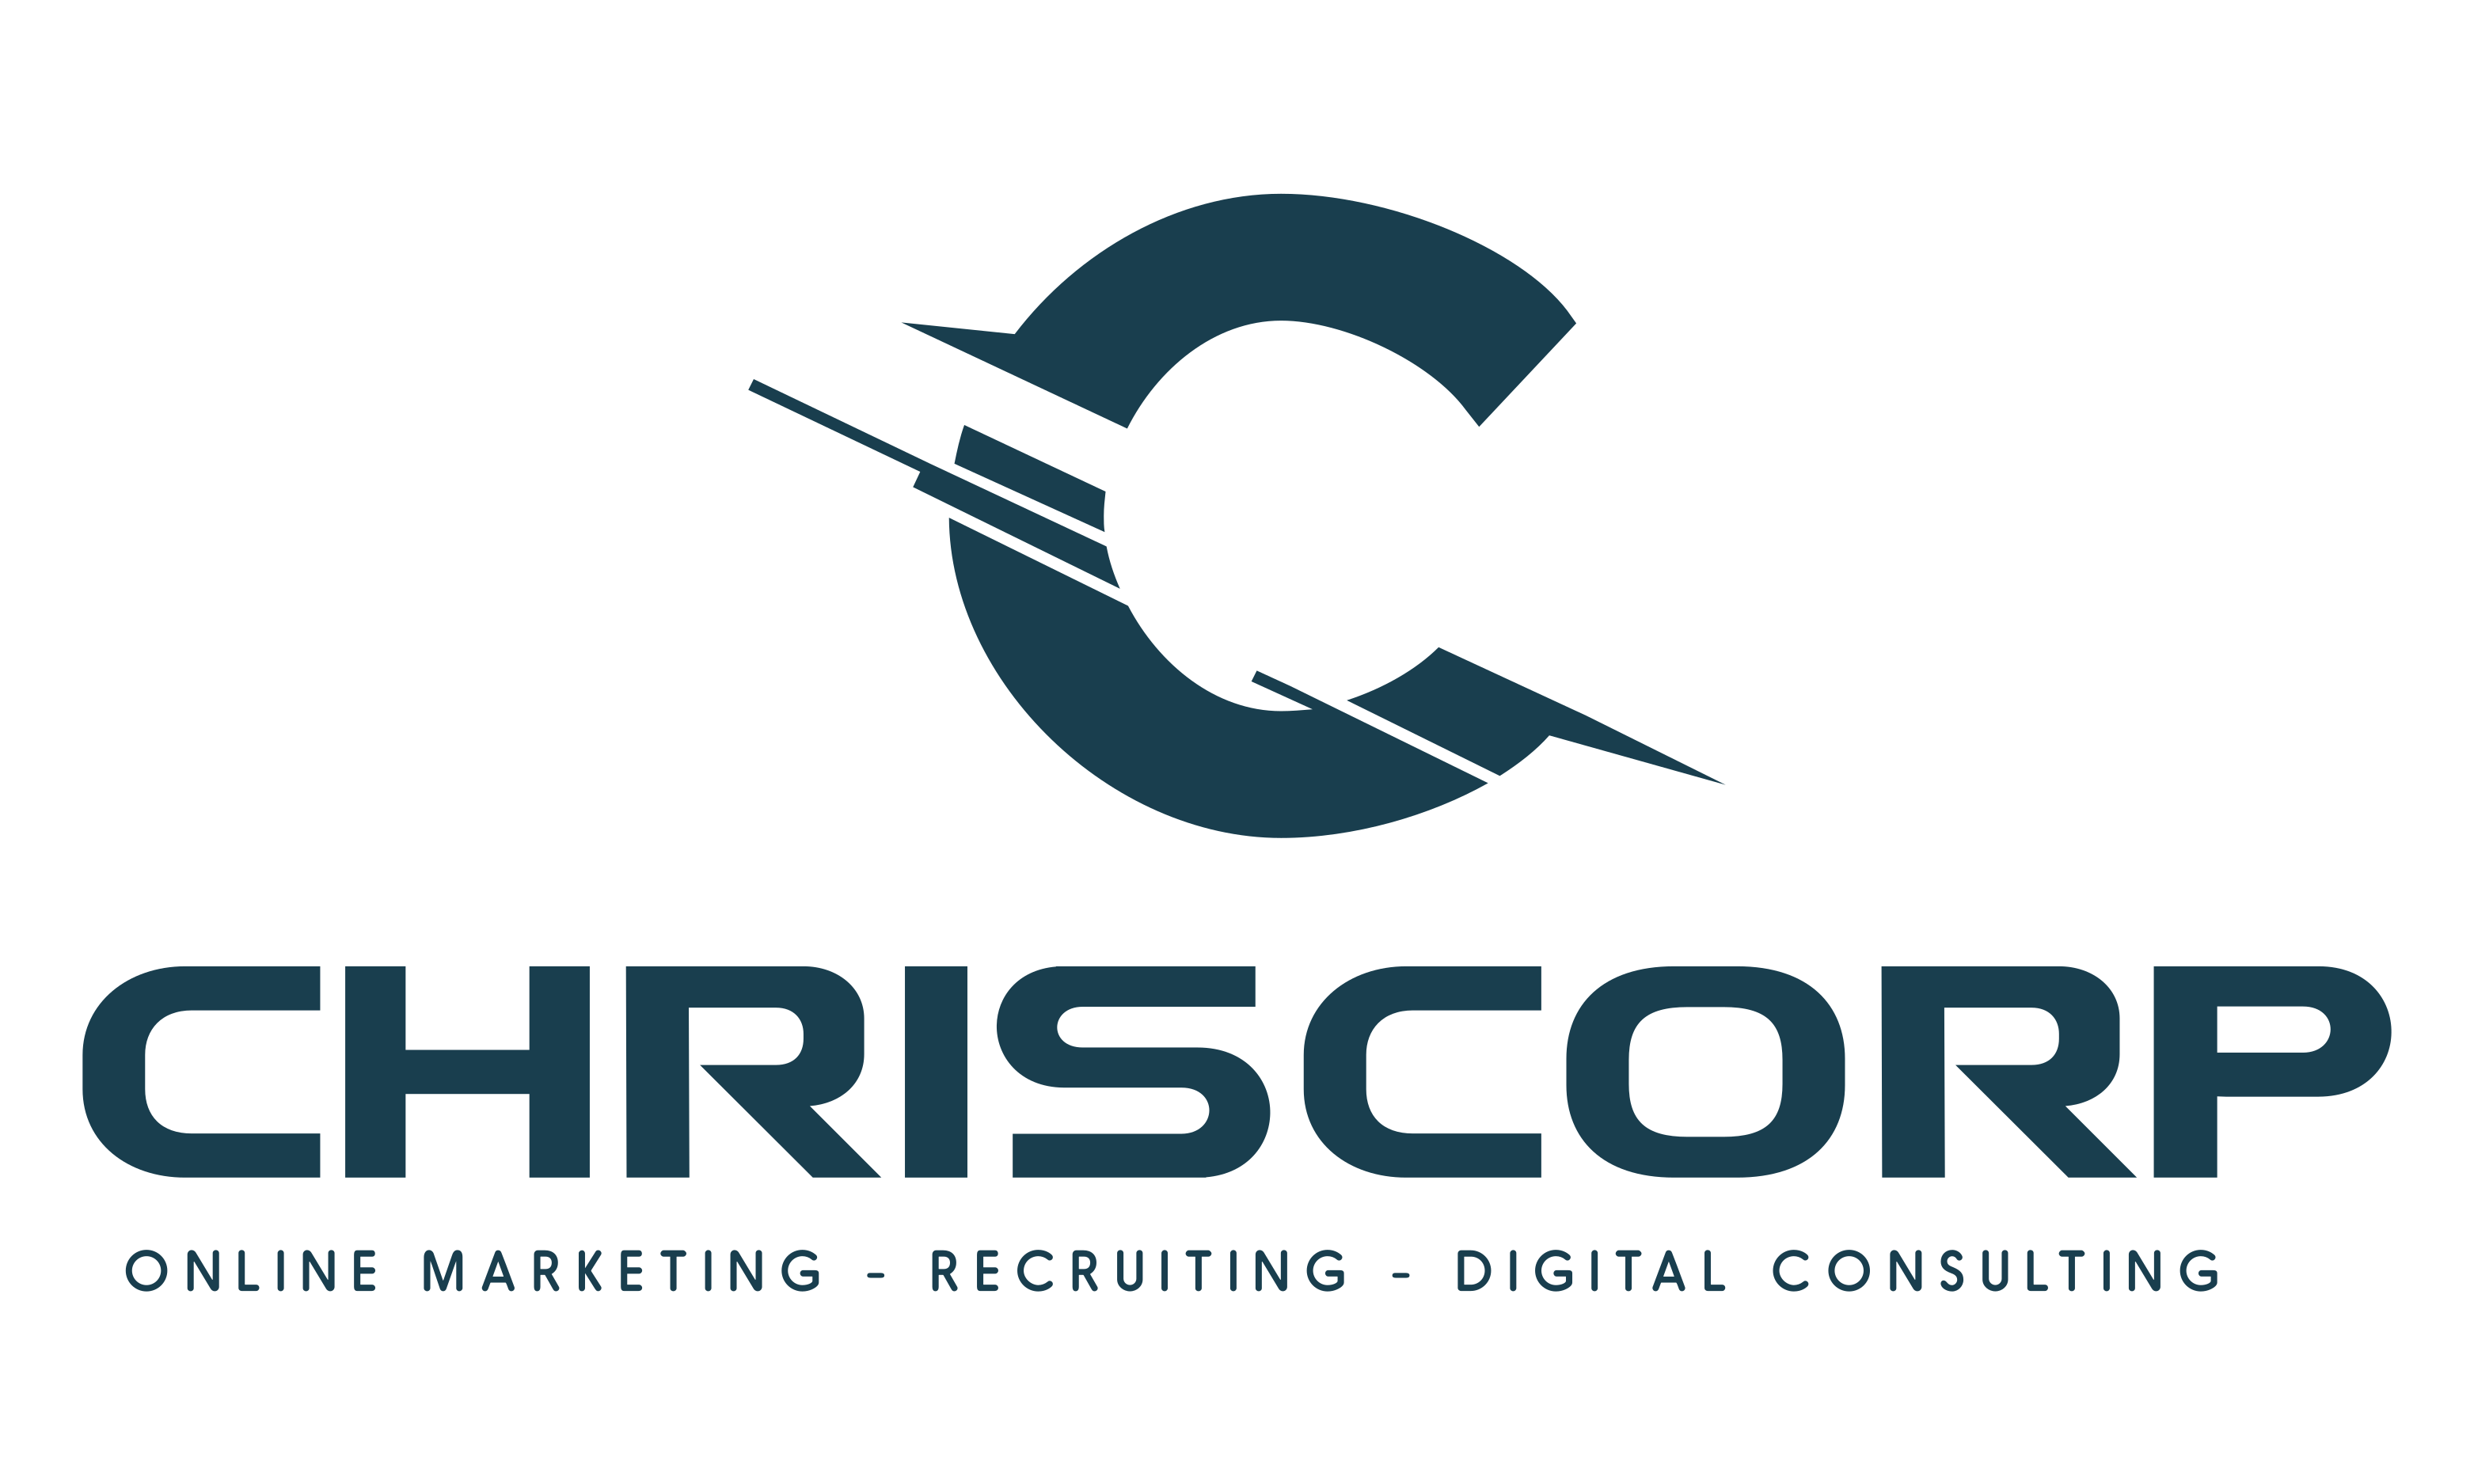 #chriscorp online marketing logo